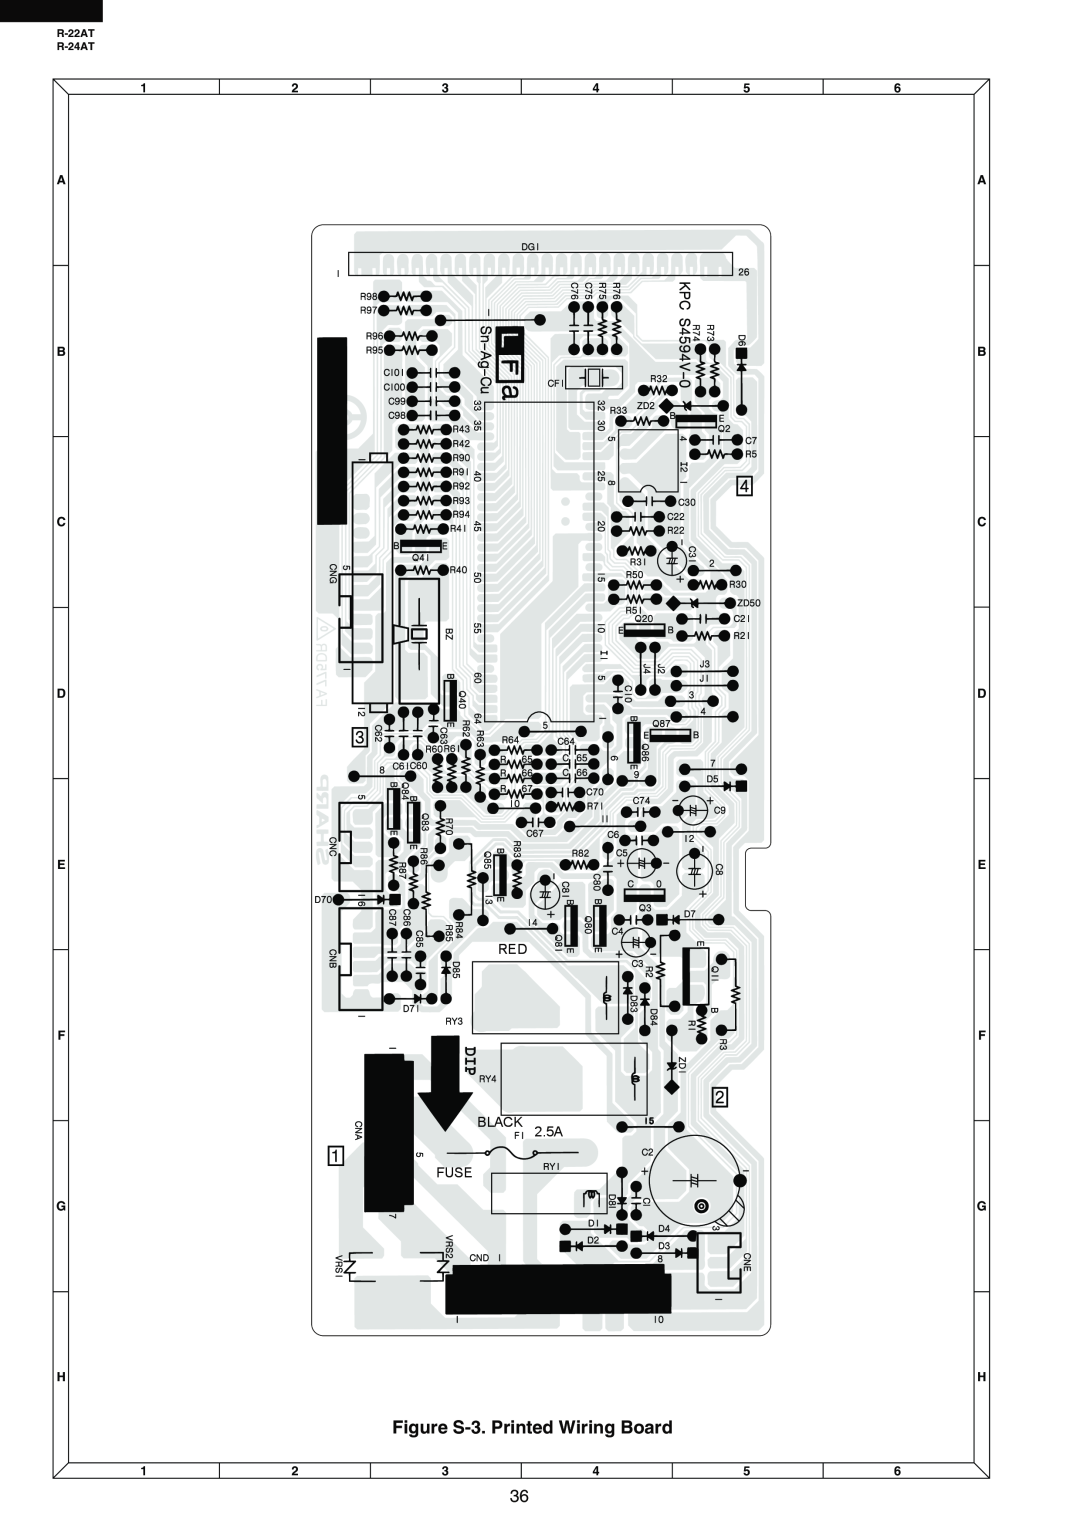 Sharp service manual Figure S-3. Printed Wiring Board, BLACK 2.5A FUSE, A B C D E F G H, R-22AT R-24AT 